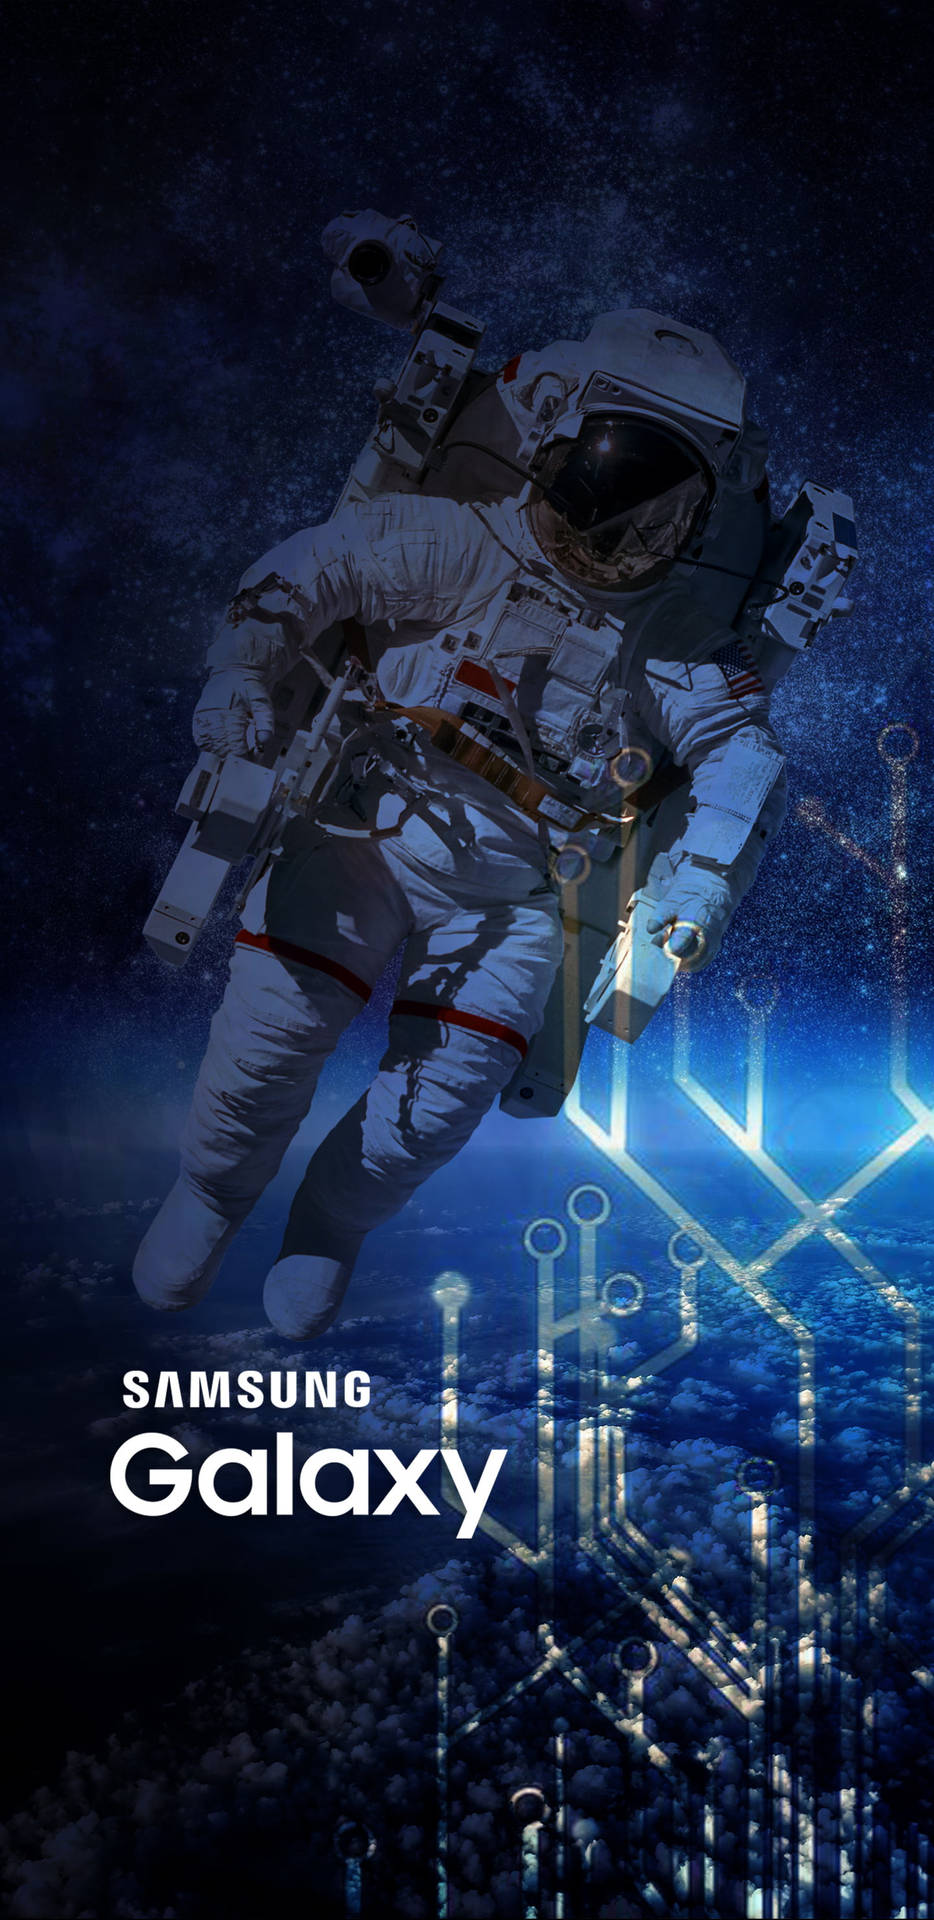 Samsung Galaxy Astronaut In Space